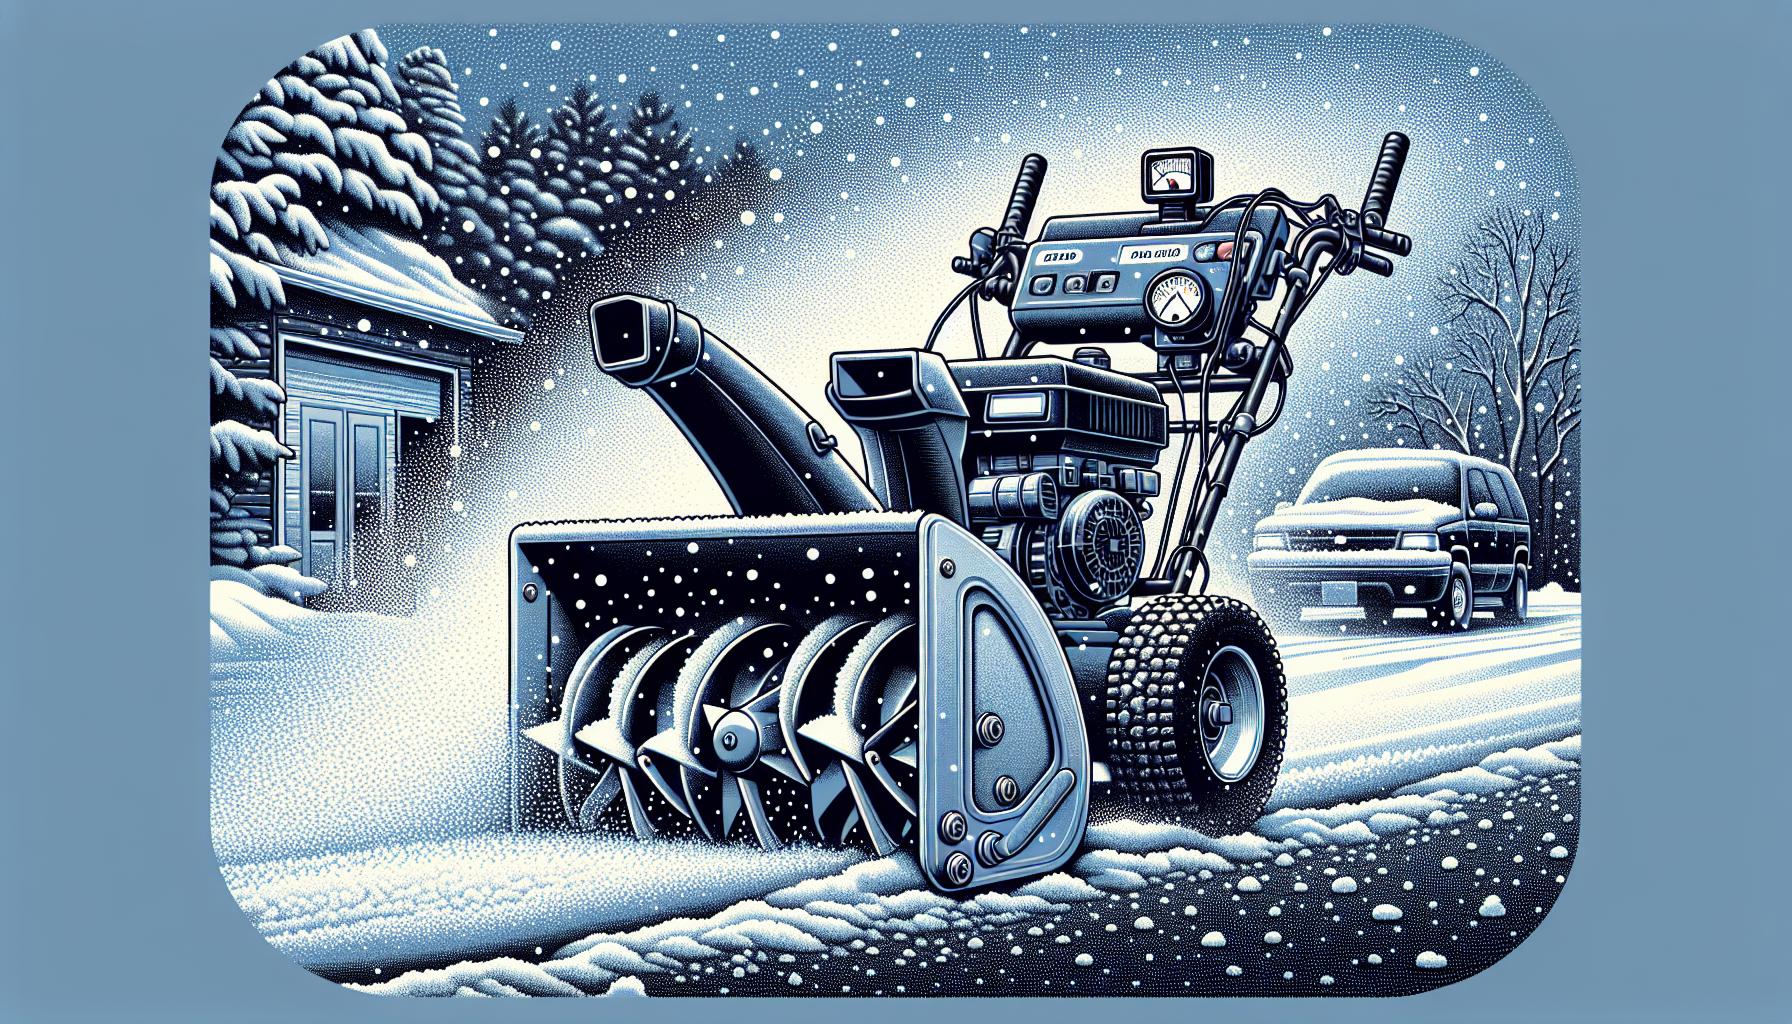 winter snow removal equipment scene